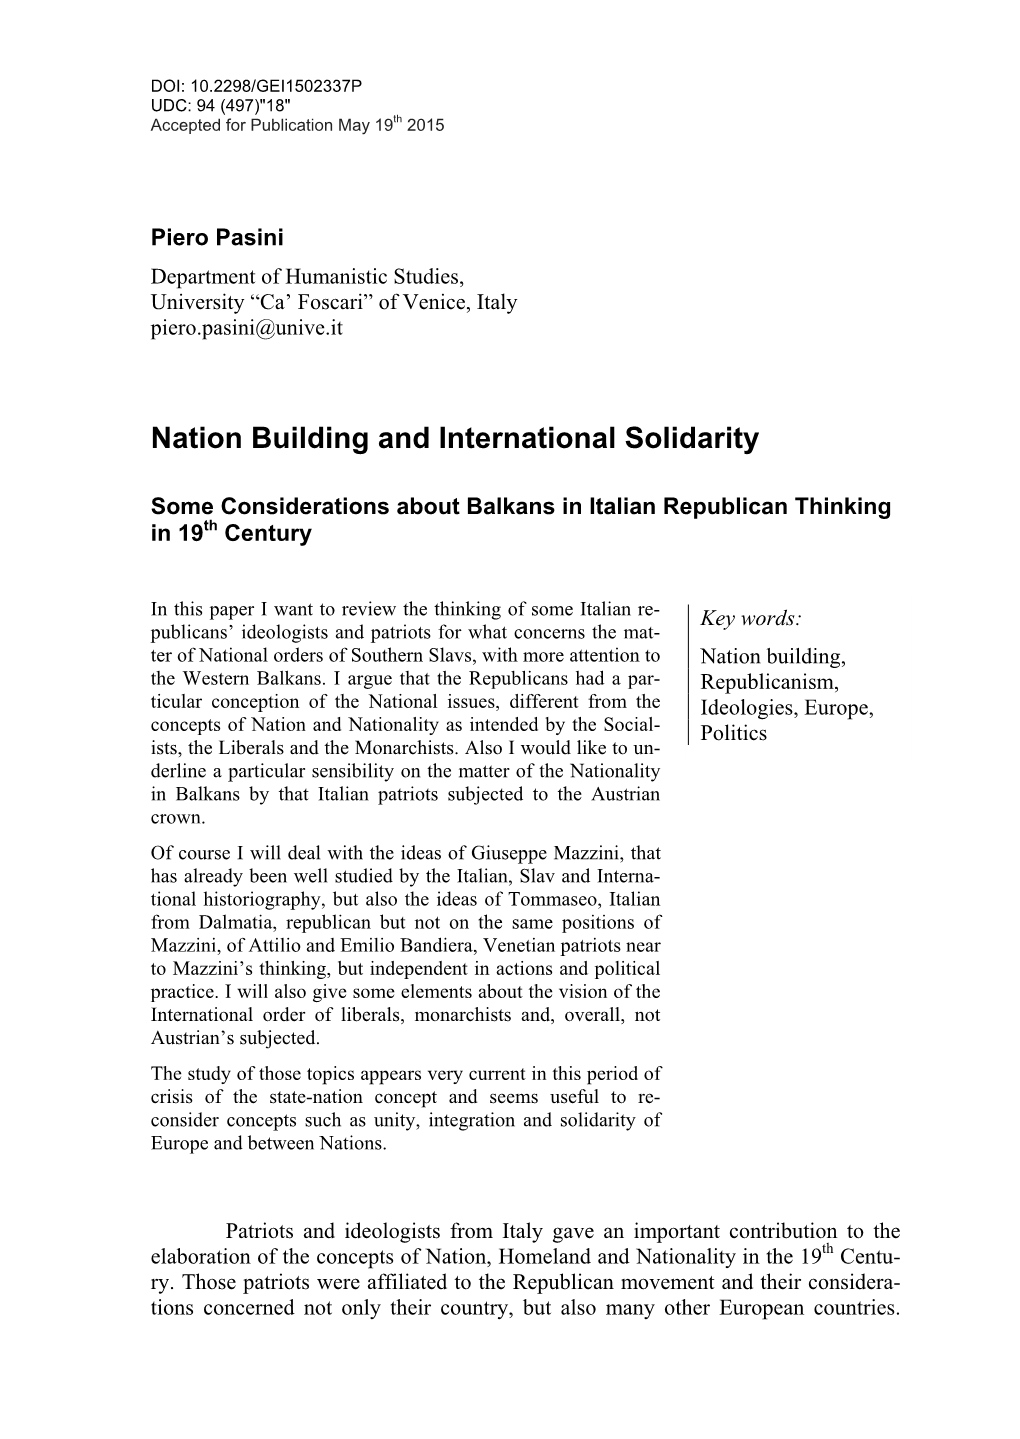 Nation Building and International Solidarity